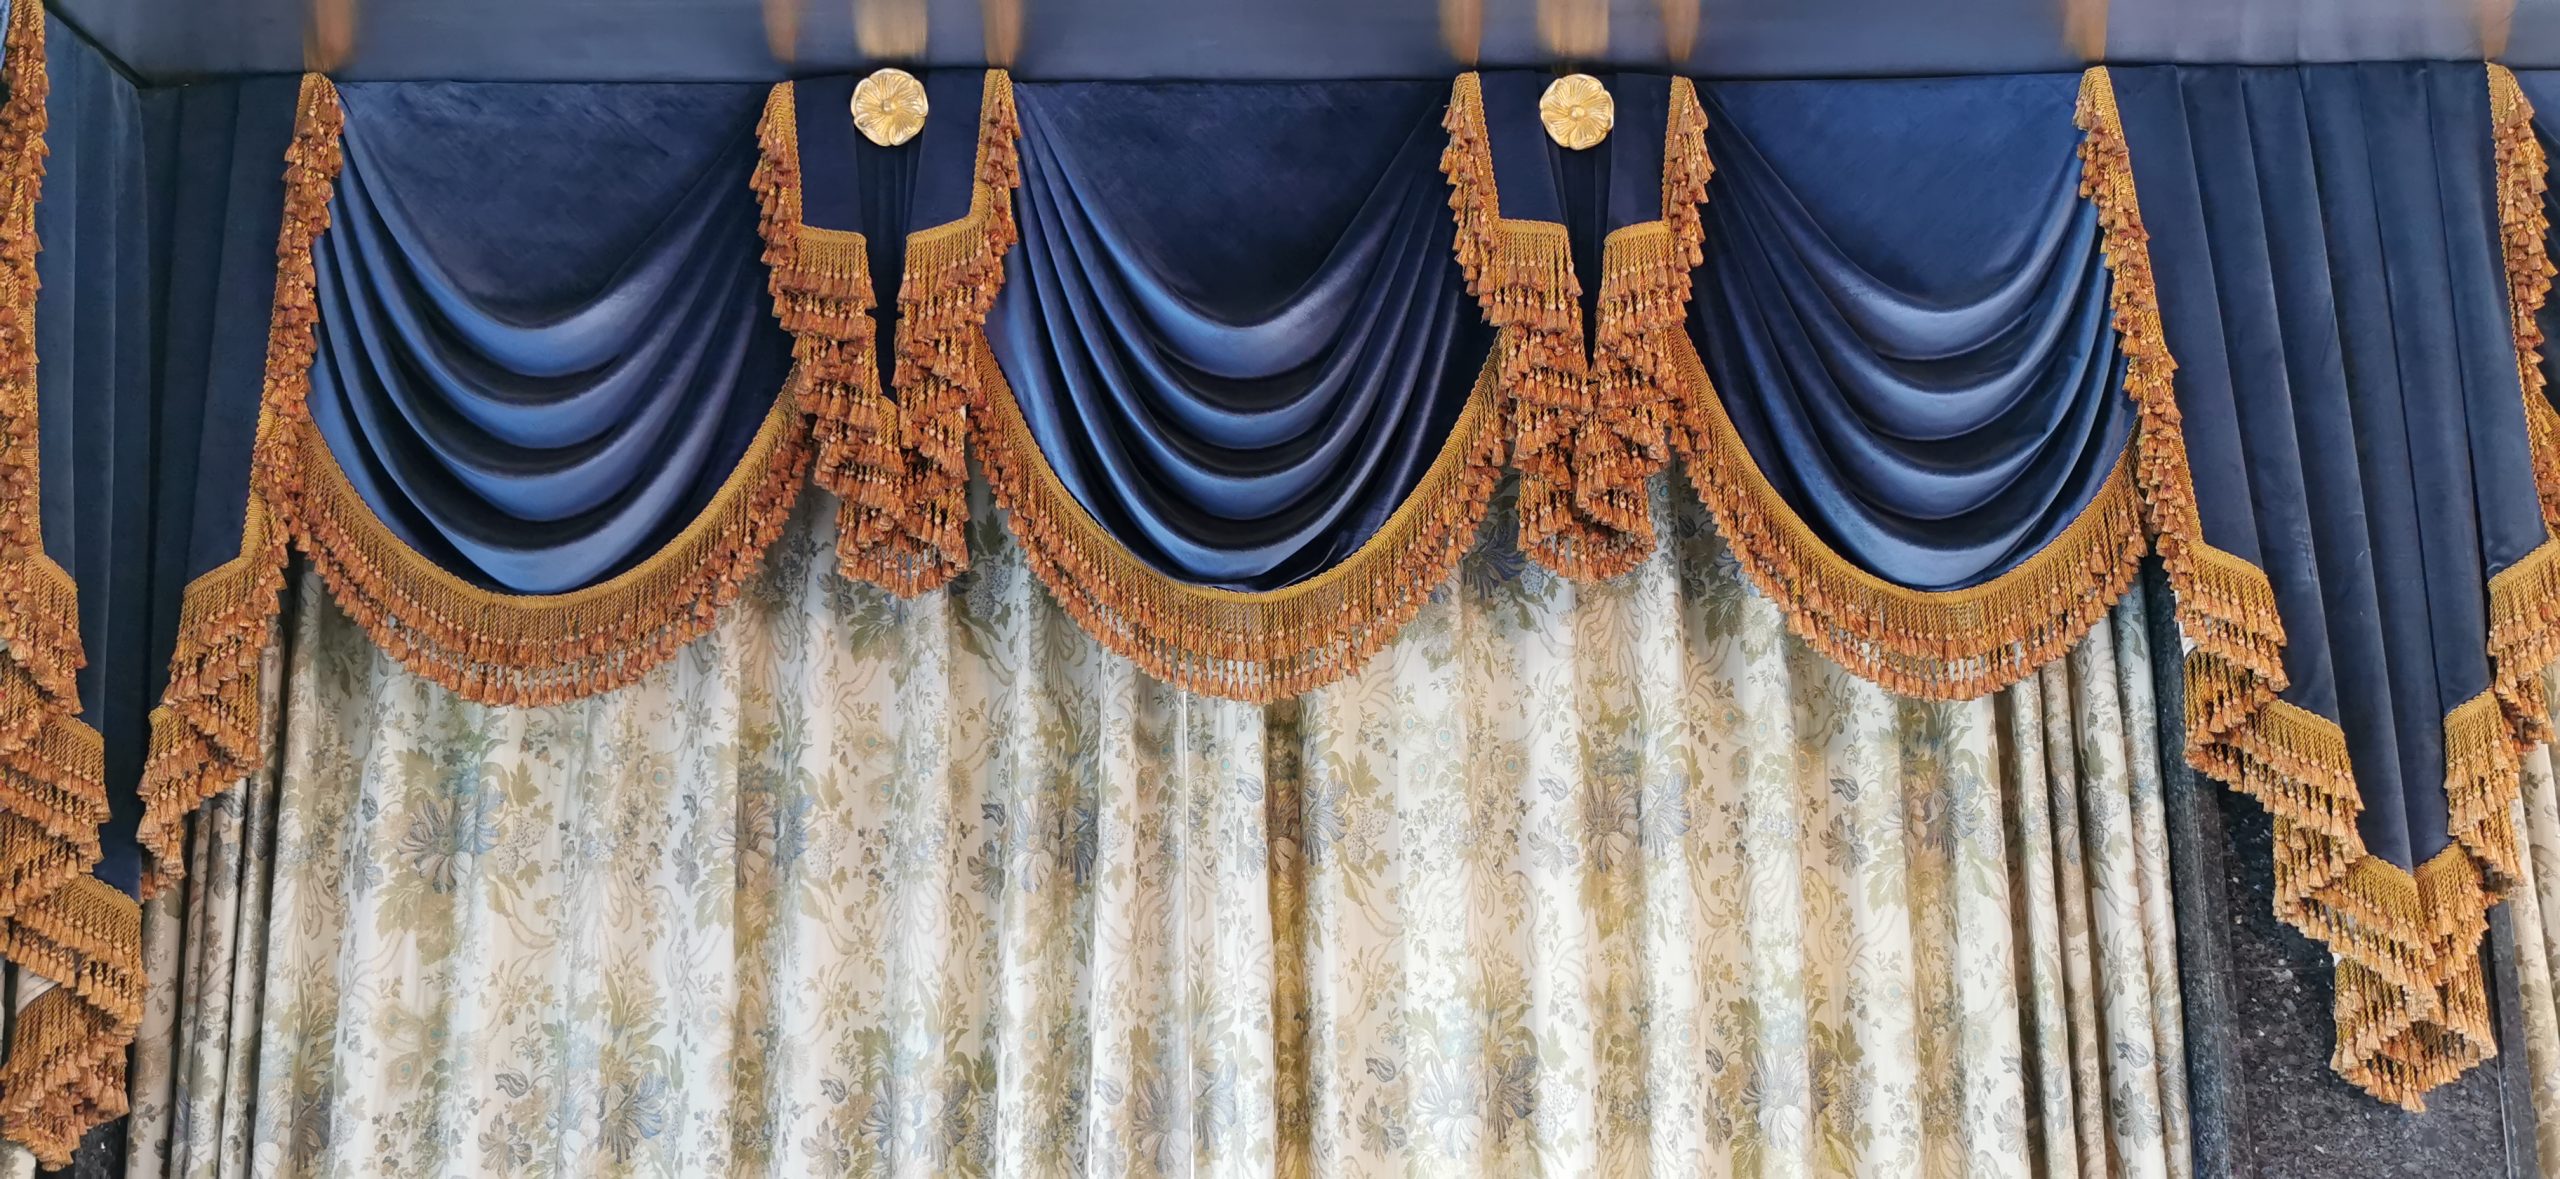 #siangthaiandsons #siangthai1952 #curtain #sheer #romanblind #rollerblind #drape #drapery #upholstery #tassel #tieback #trimming #embroidery #sofa #furniture #furnishing #refurbishment #madetoorder #custommade #homeimprovement #luxurycurtain #luxurydesign #interiordesign #decoration #homedecor #tapestry #carpet